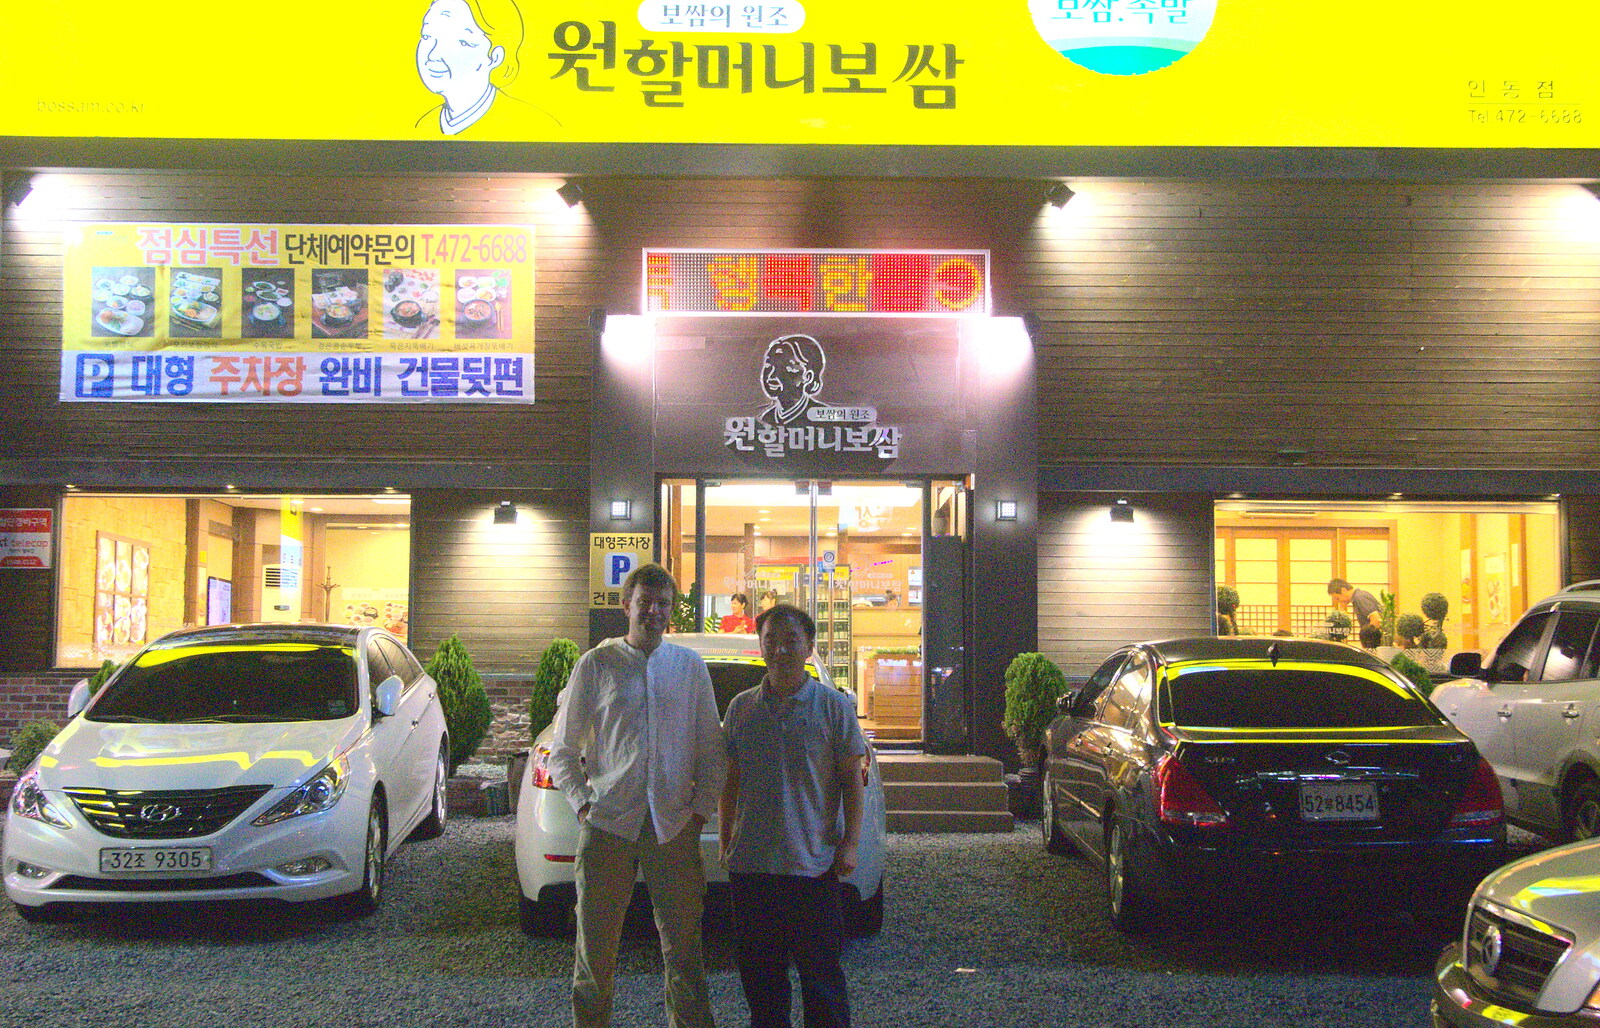 Nosher and Chips from Seomun Market, Daegu, South Korea - 1st July 2012